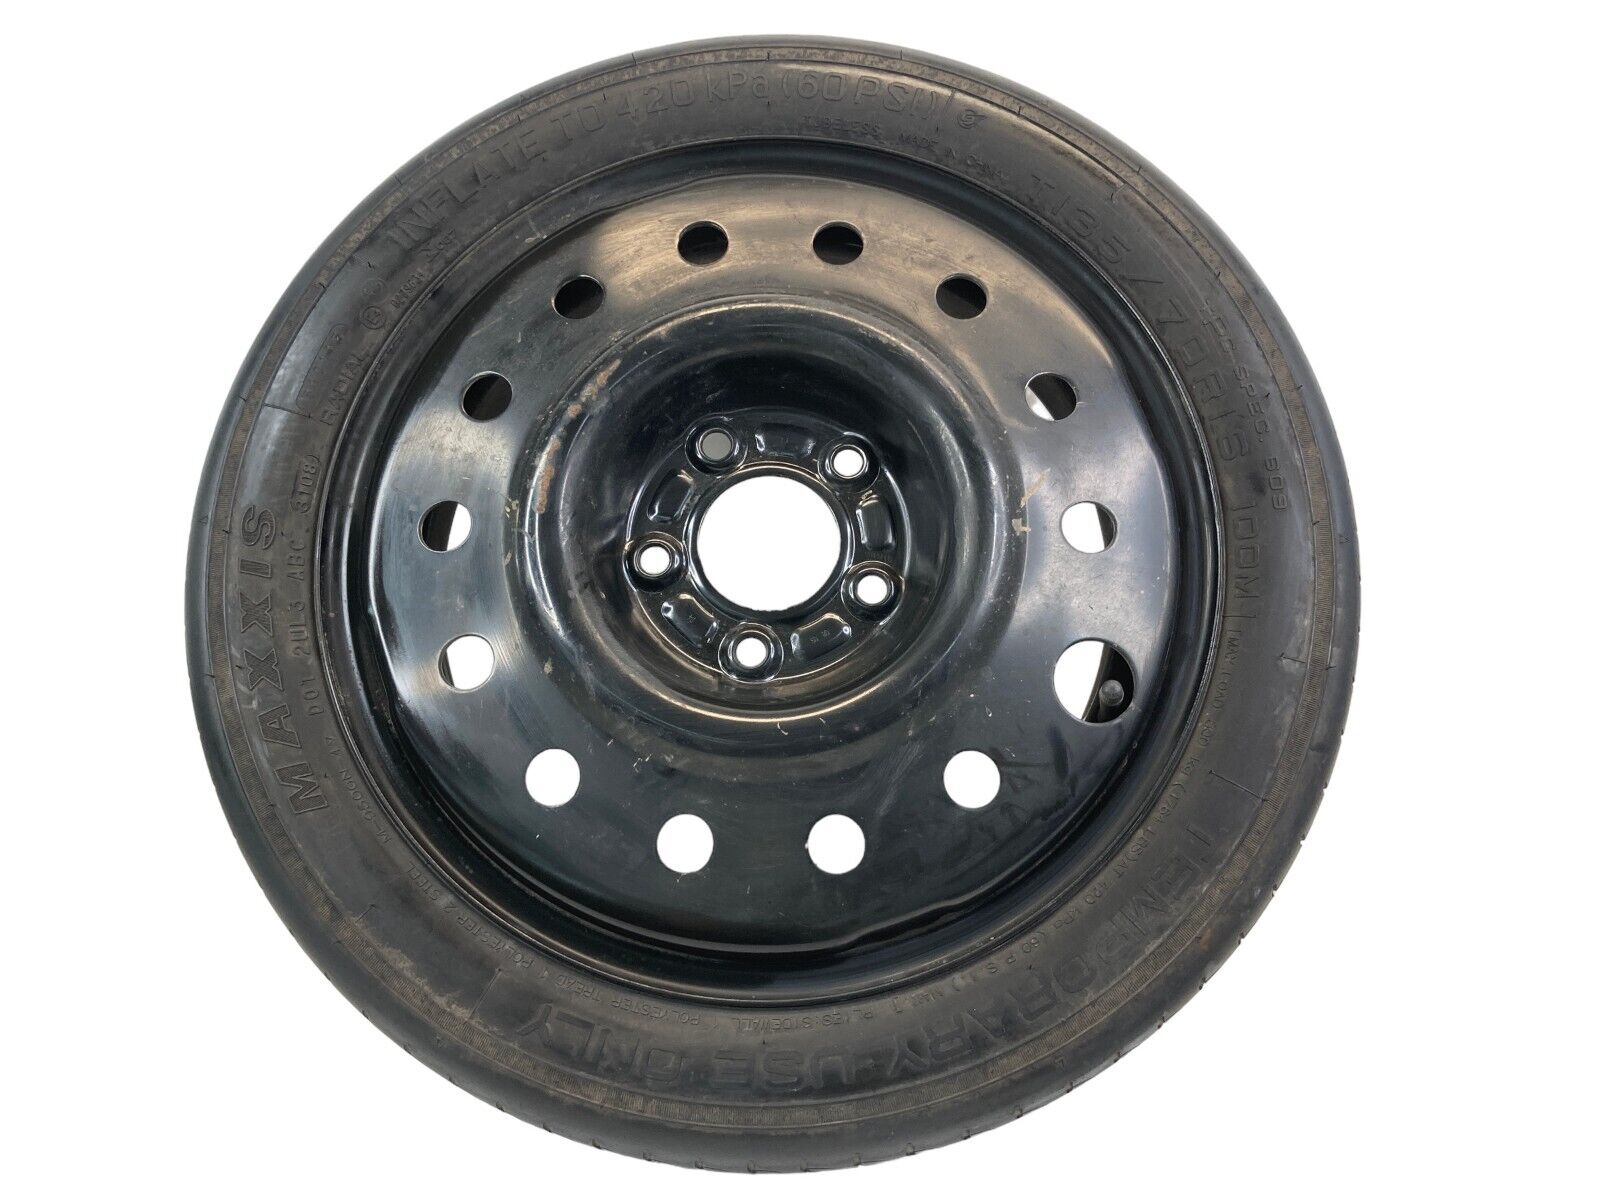 2002-2010 Saturn Vue Emergency Spare Tire Wheel Compact T135/70 R16  E4-0229634